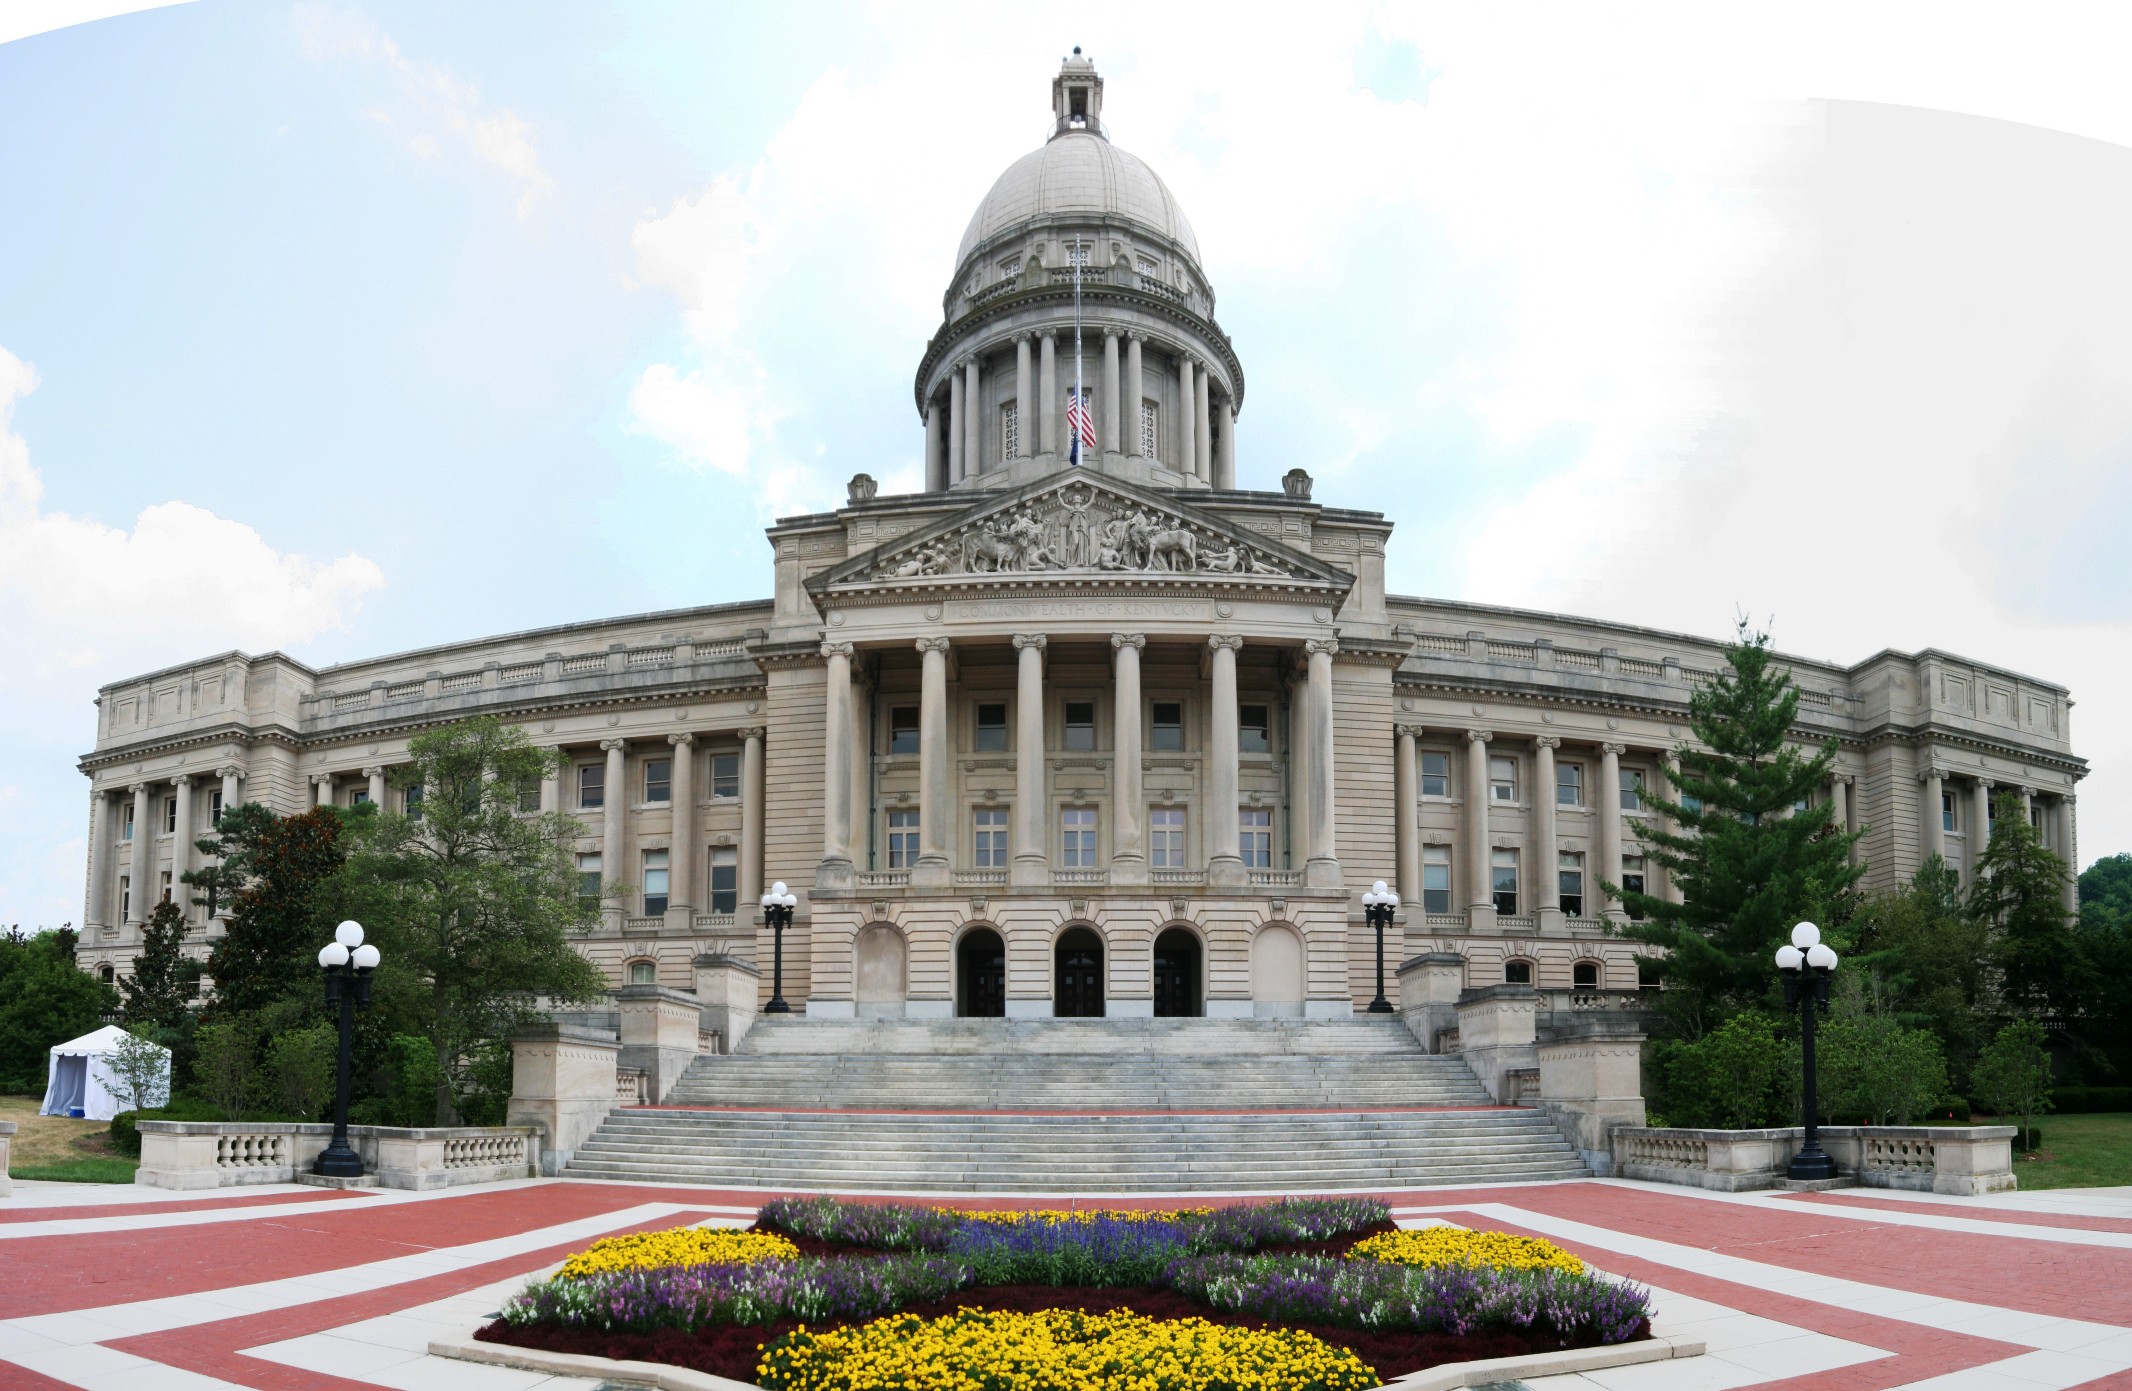 Kentucky State Capitol (Image: OZinOH via flickr)